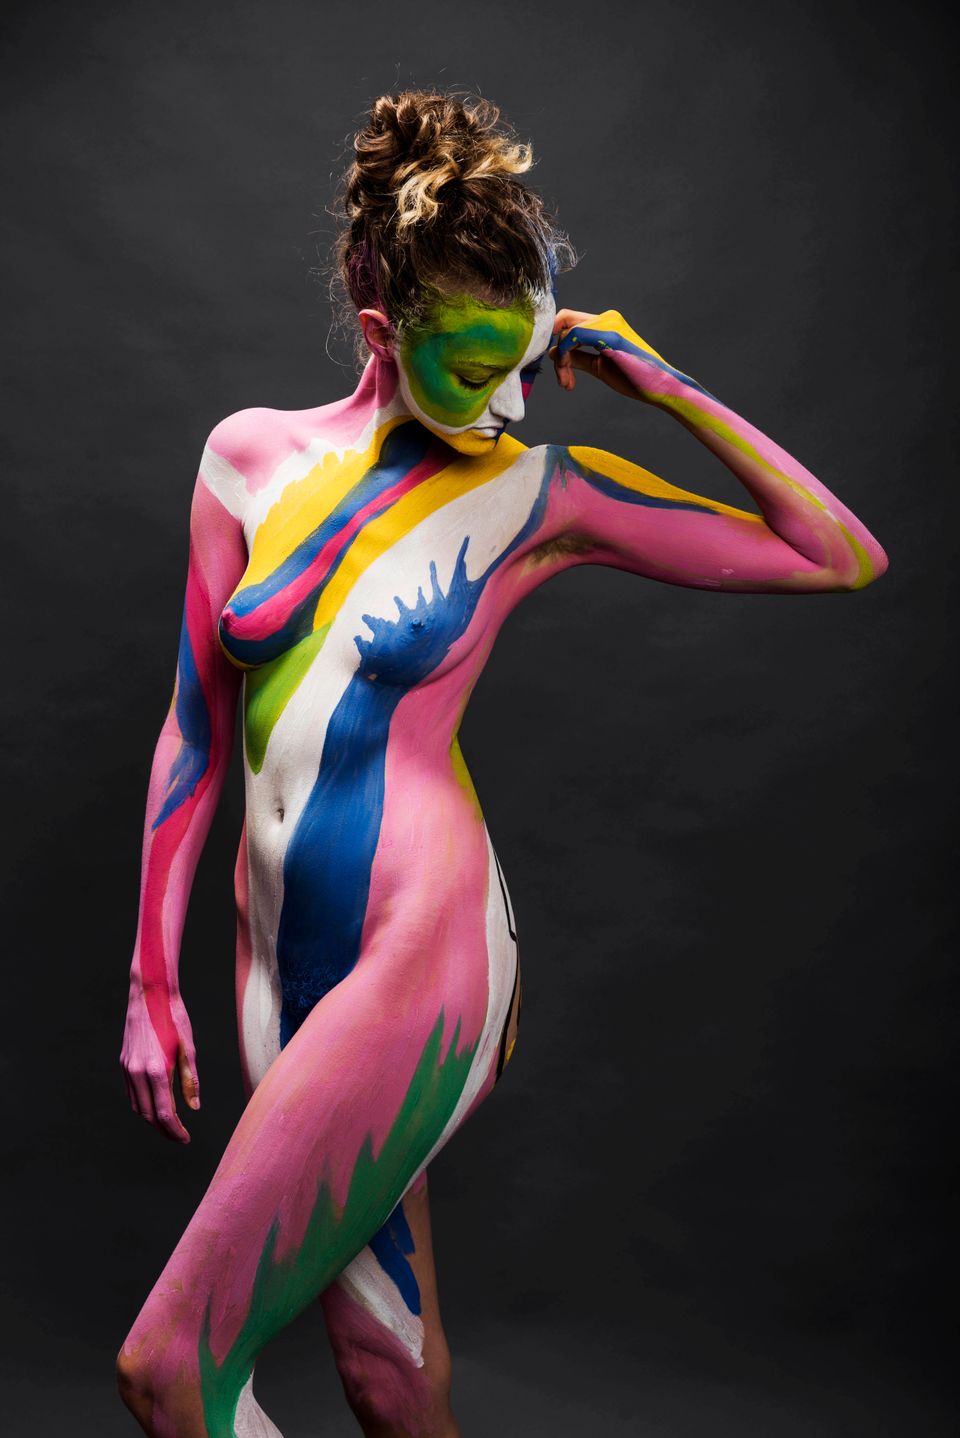 ansh manchanda recommends body paint images pic